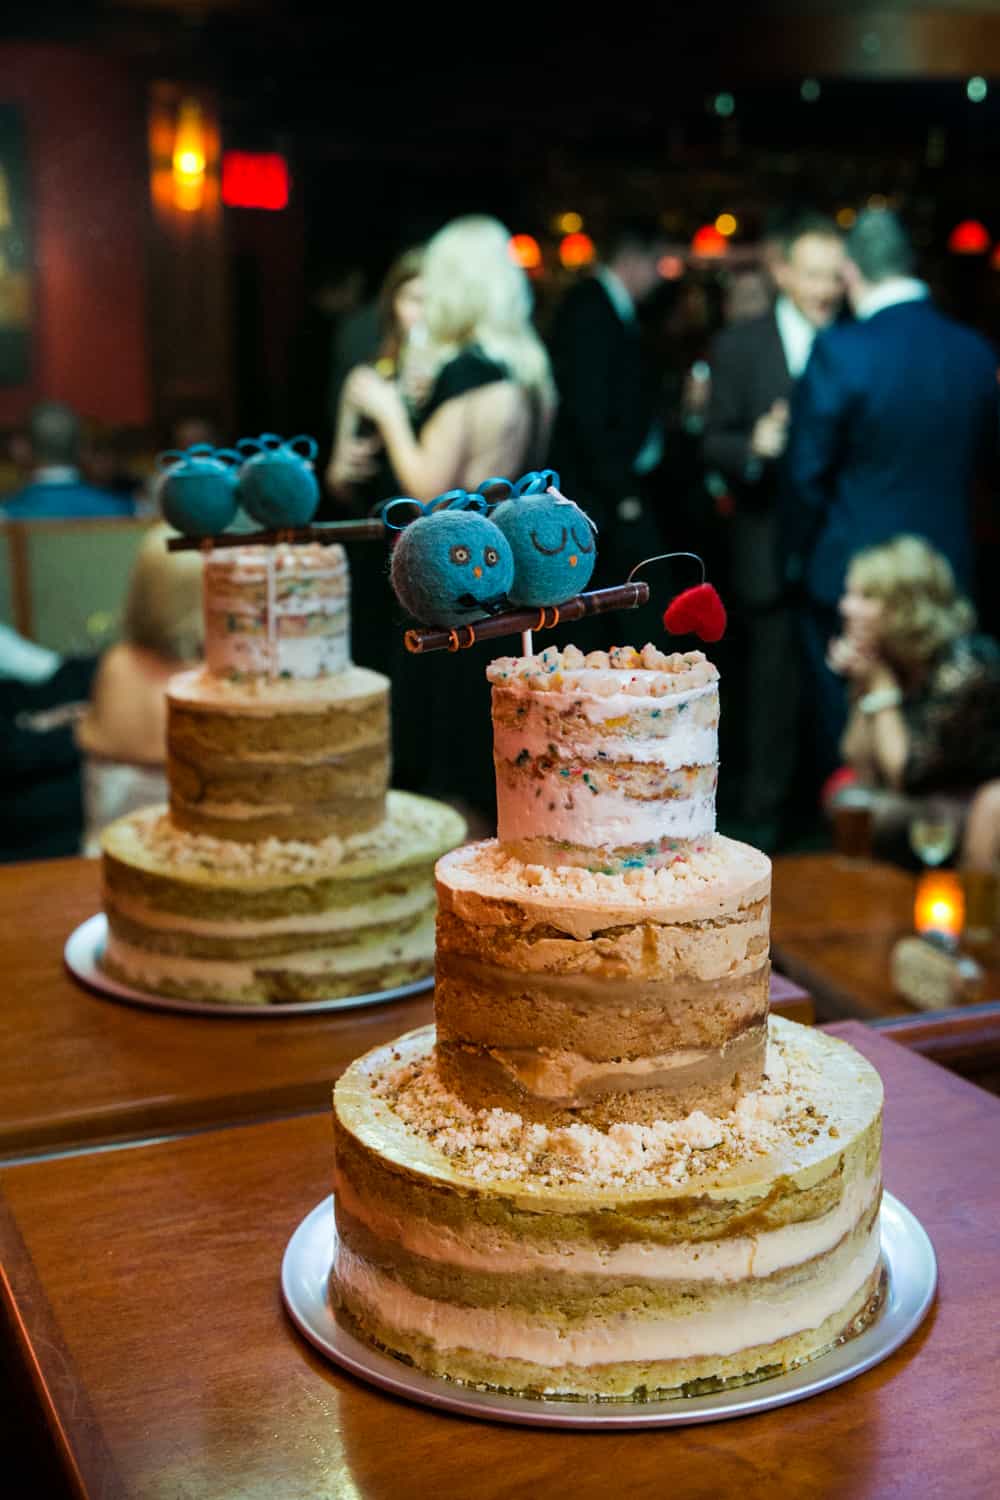 Wedding cake with blue bird topper at a Bergdorf Goodman wedding reception